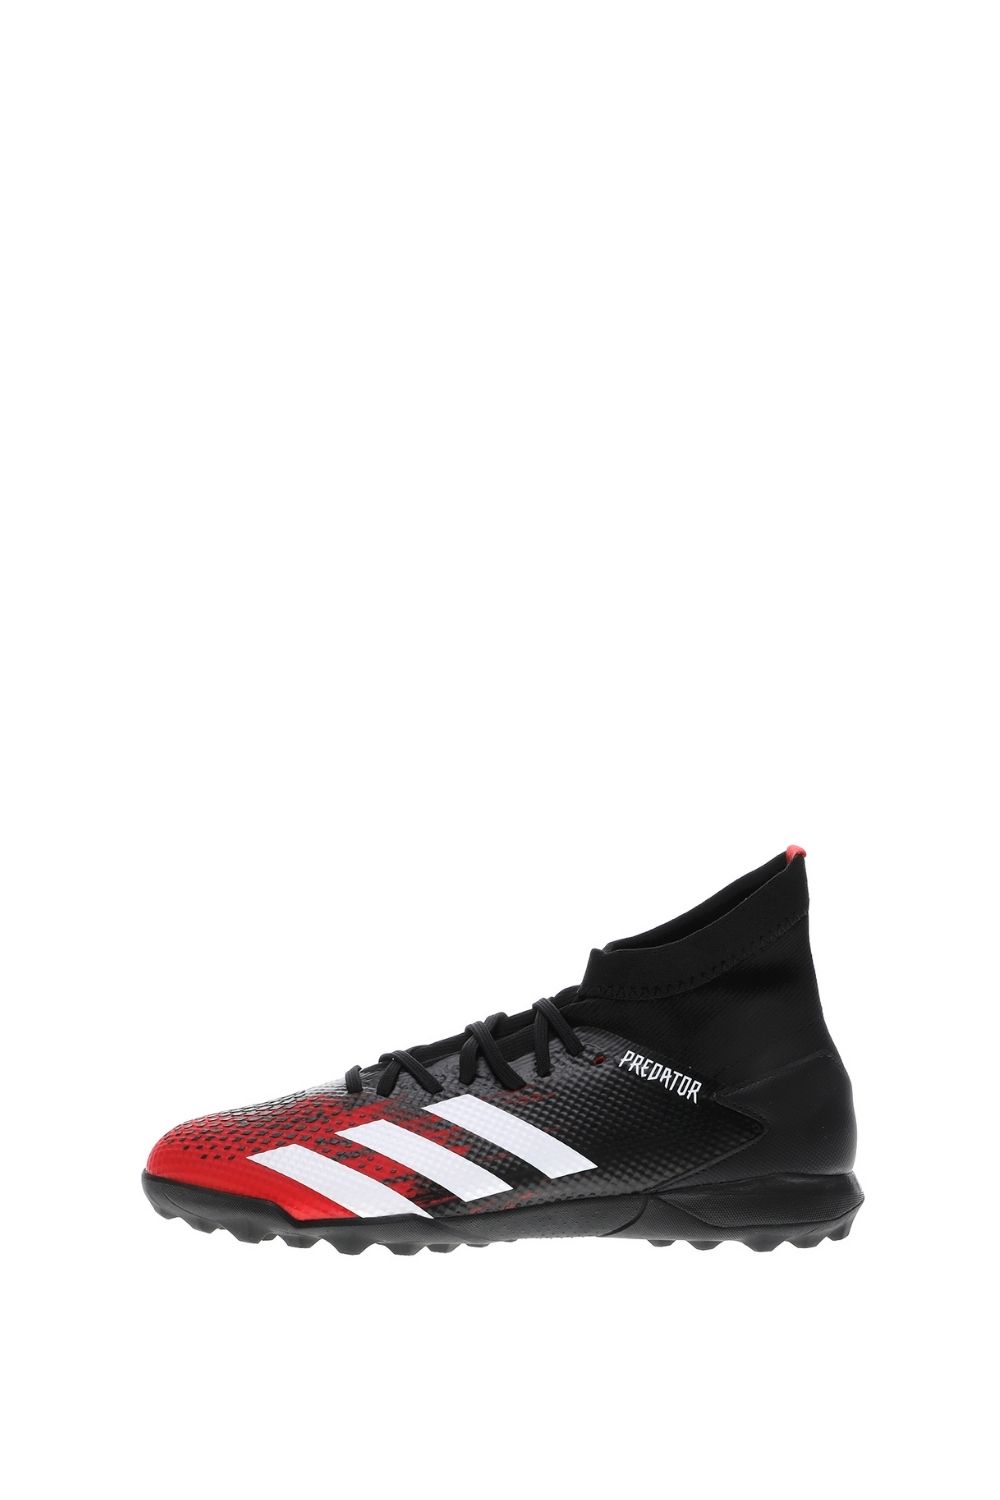 adidas Performance - Ανδρικά παπούτσια football adidas Performance EF2208 PREDATOR 20.3 TF μαύρα Ανδρικά/Παπούτσια/Αθλητικά/Football